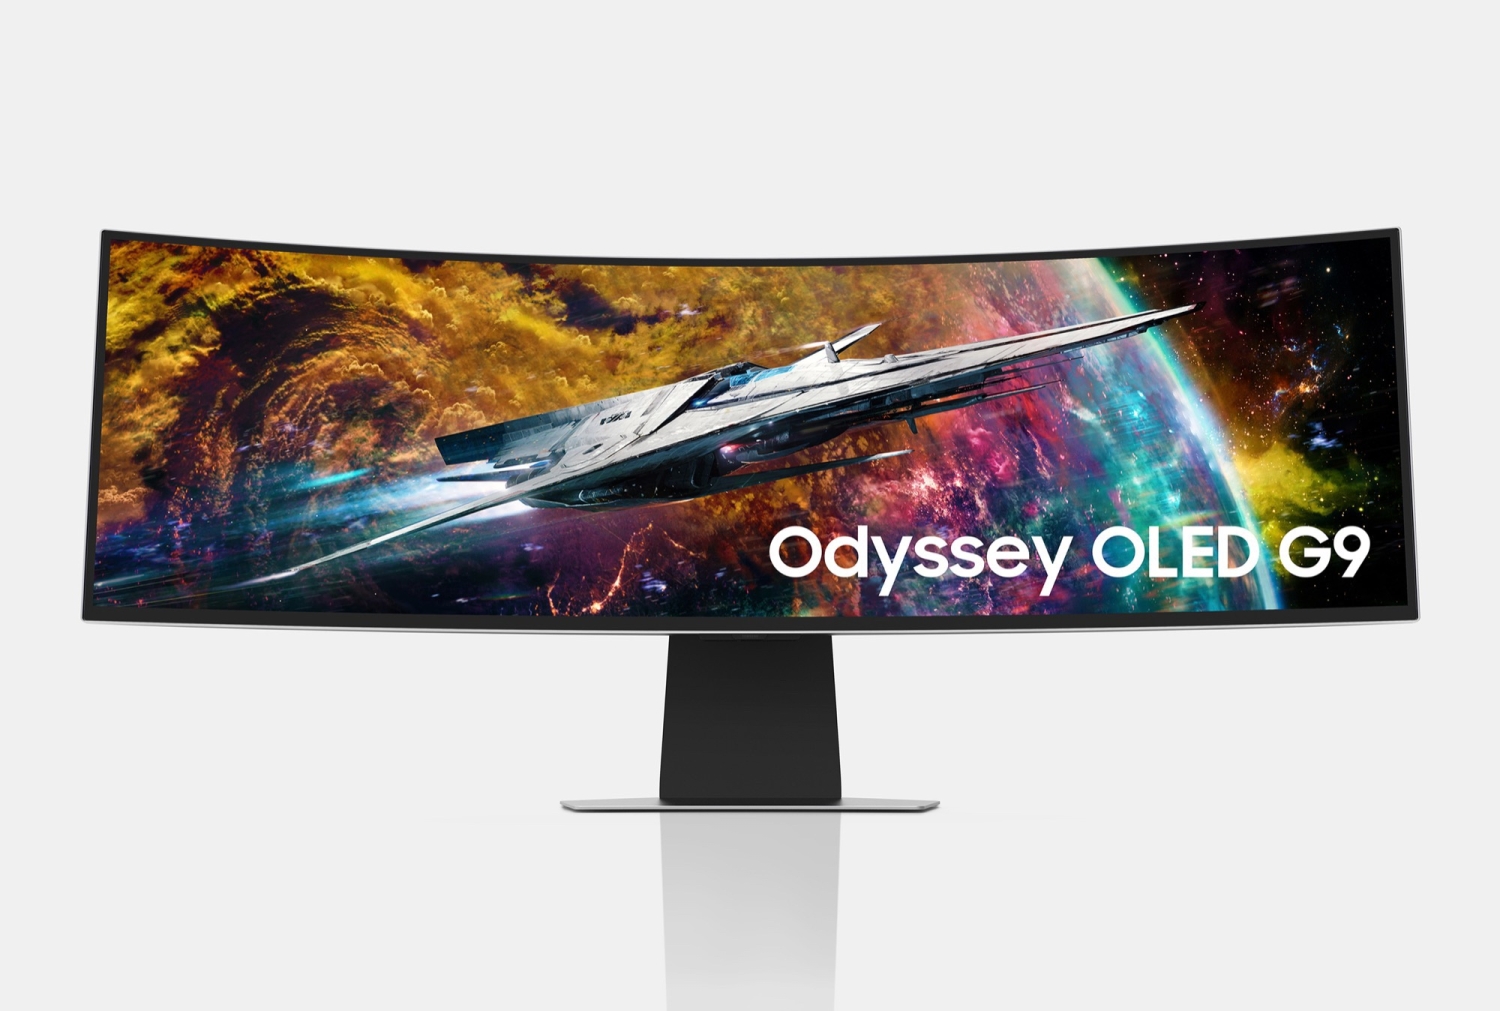 TweakTown Enlarged Image - Samsung's new Odyssey OLED G9 gaming monitor